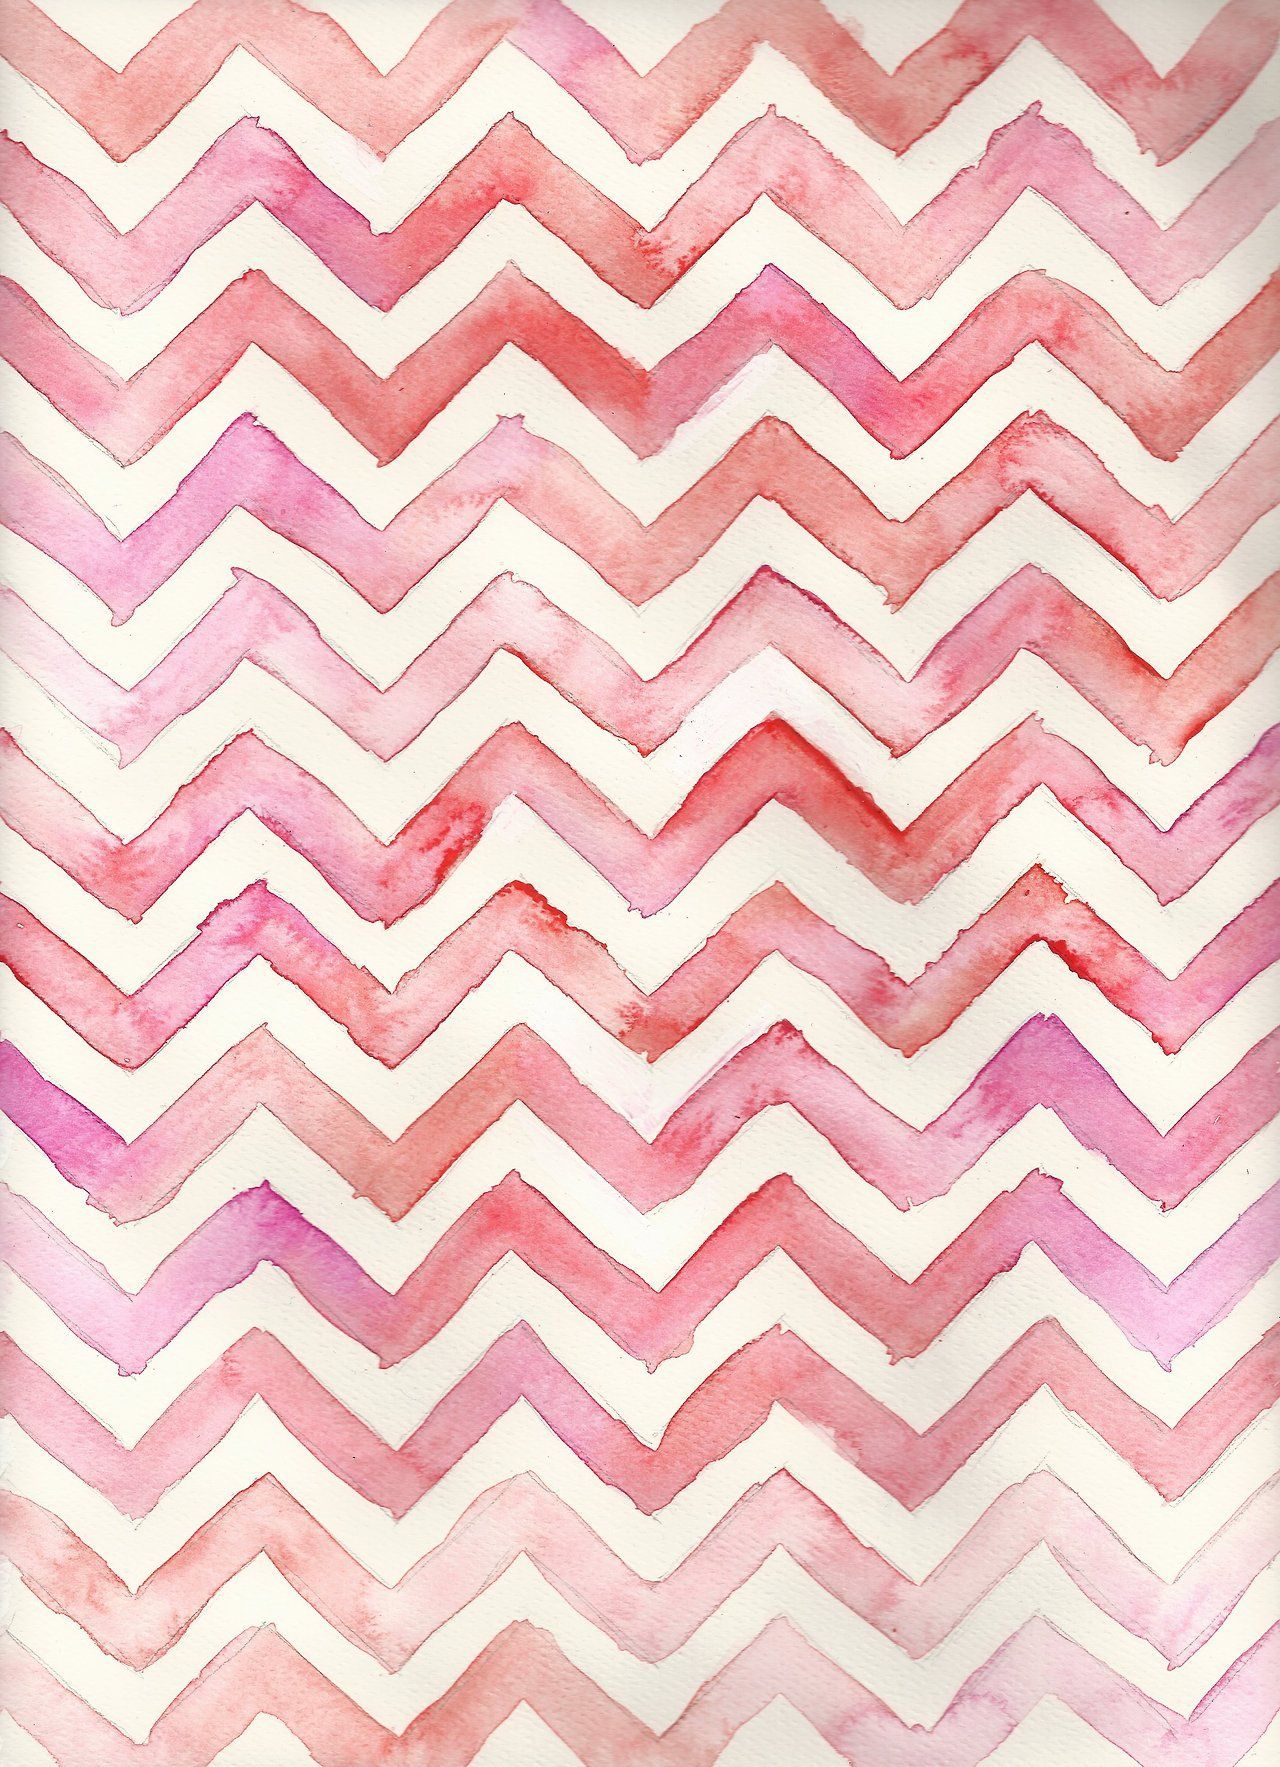 Katie's Bliss. Watercolor pattern, Pattern, Pink patterns